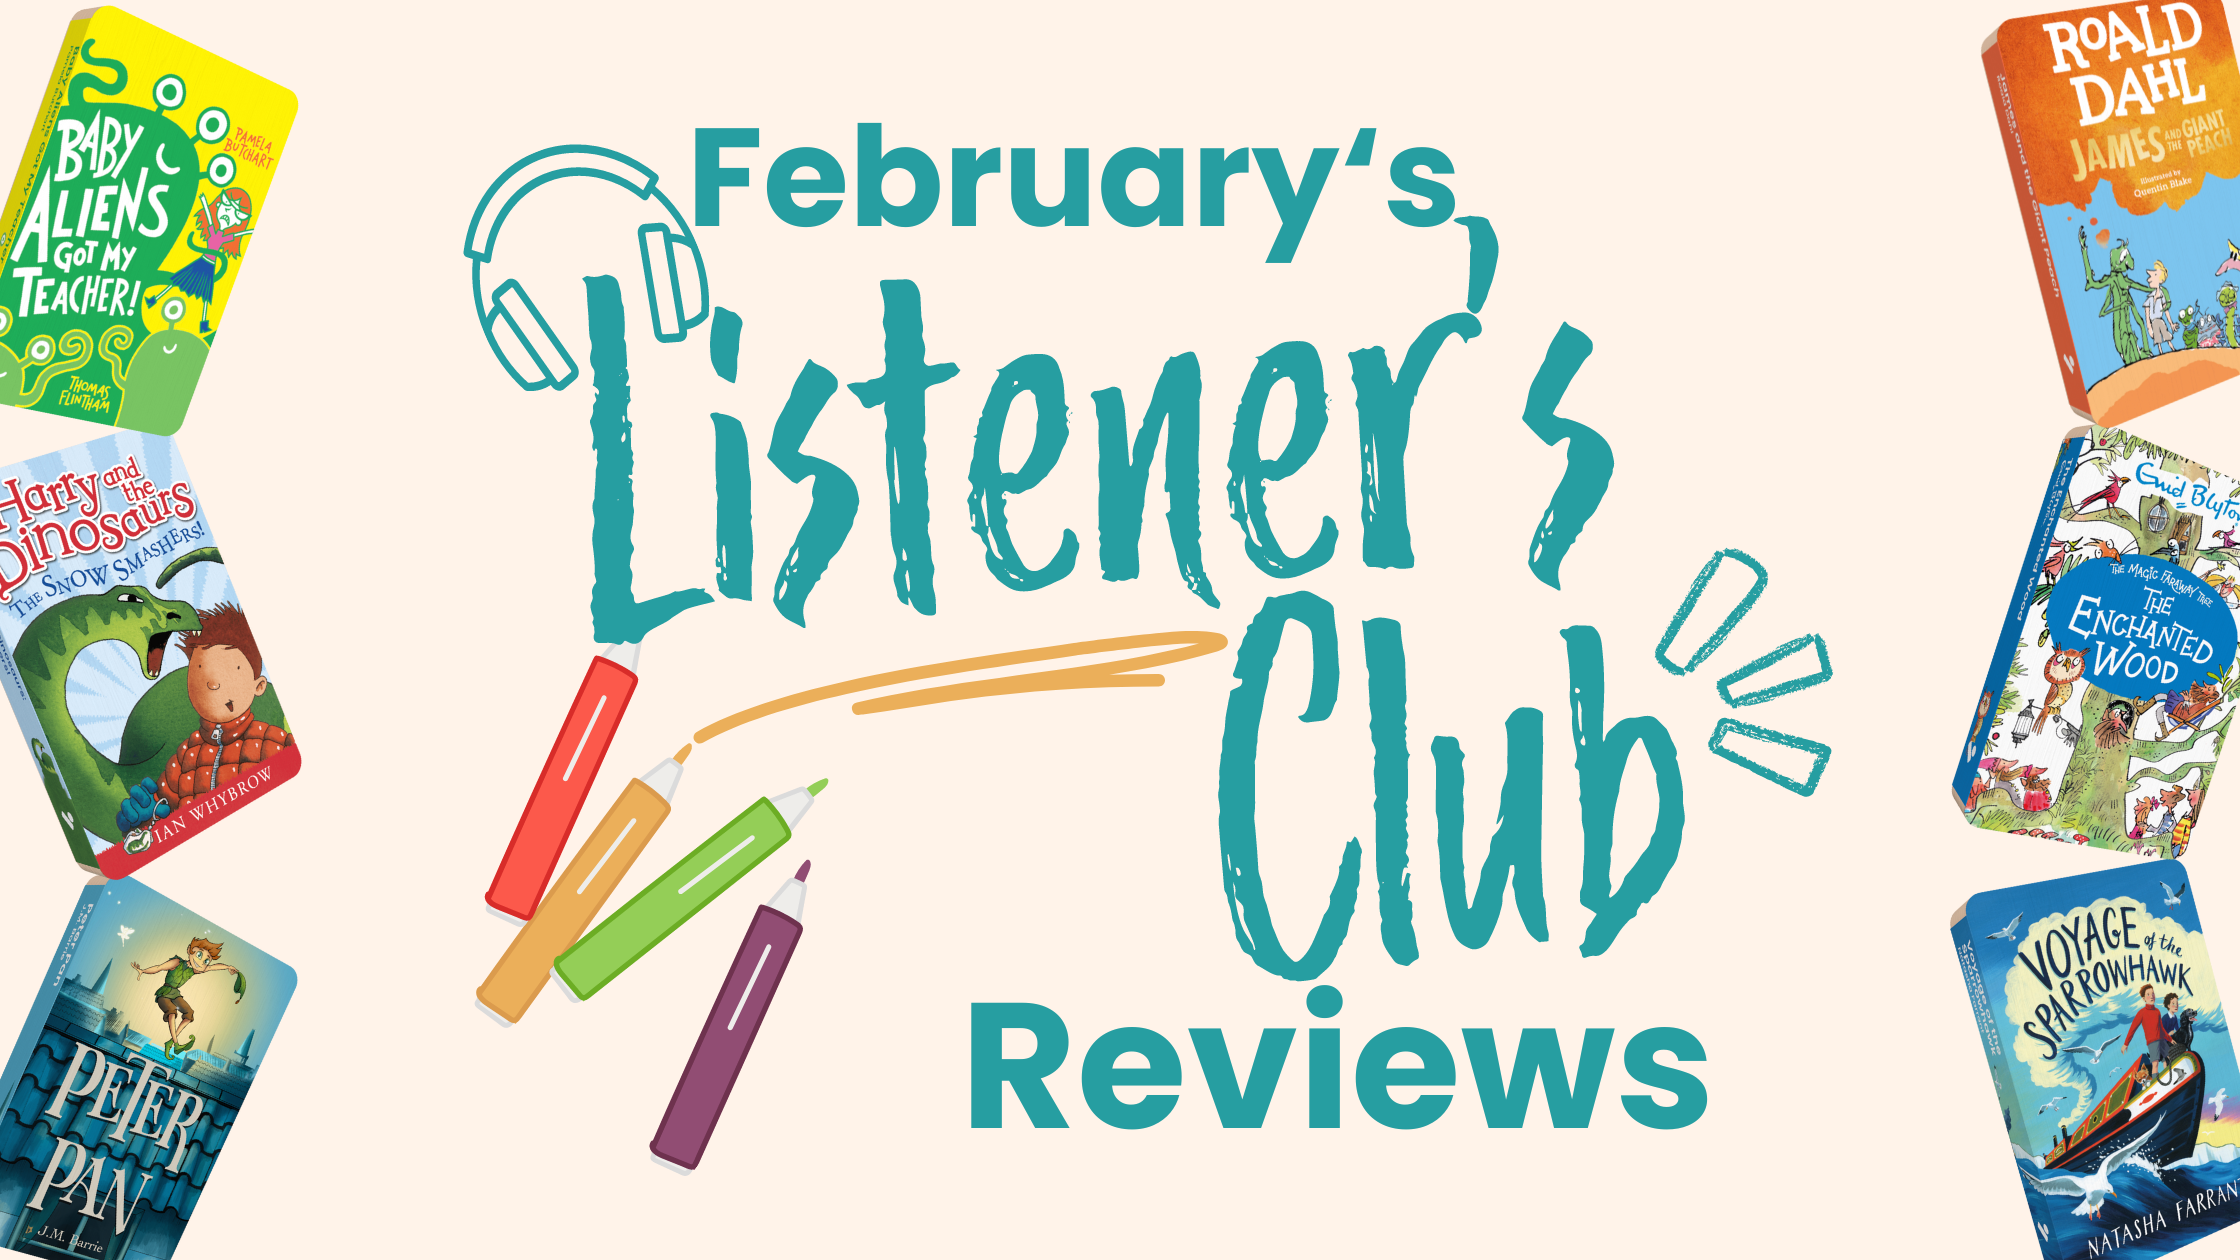 February's Listeners Club Reviews